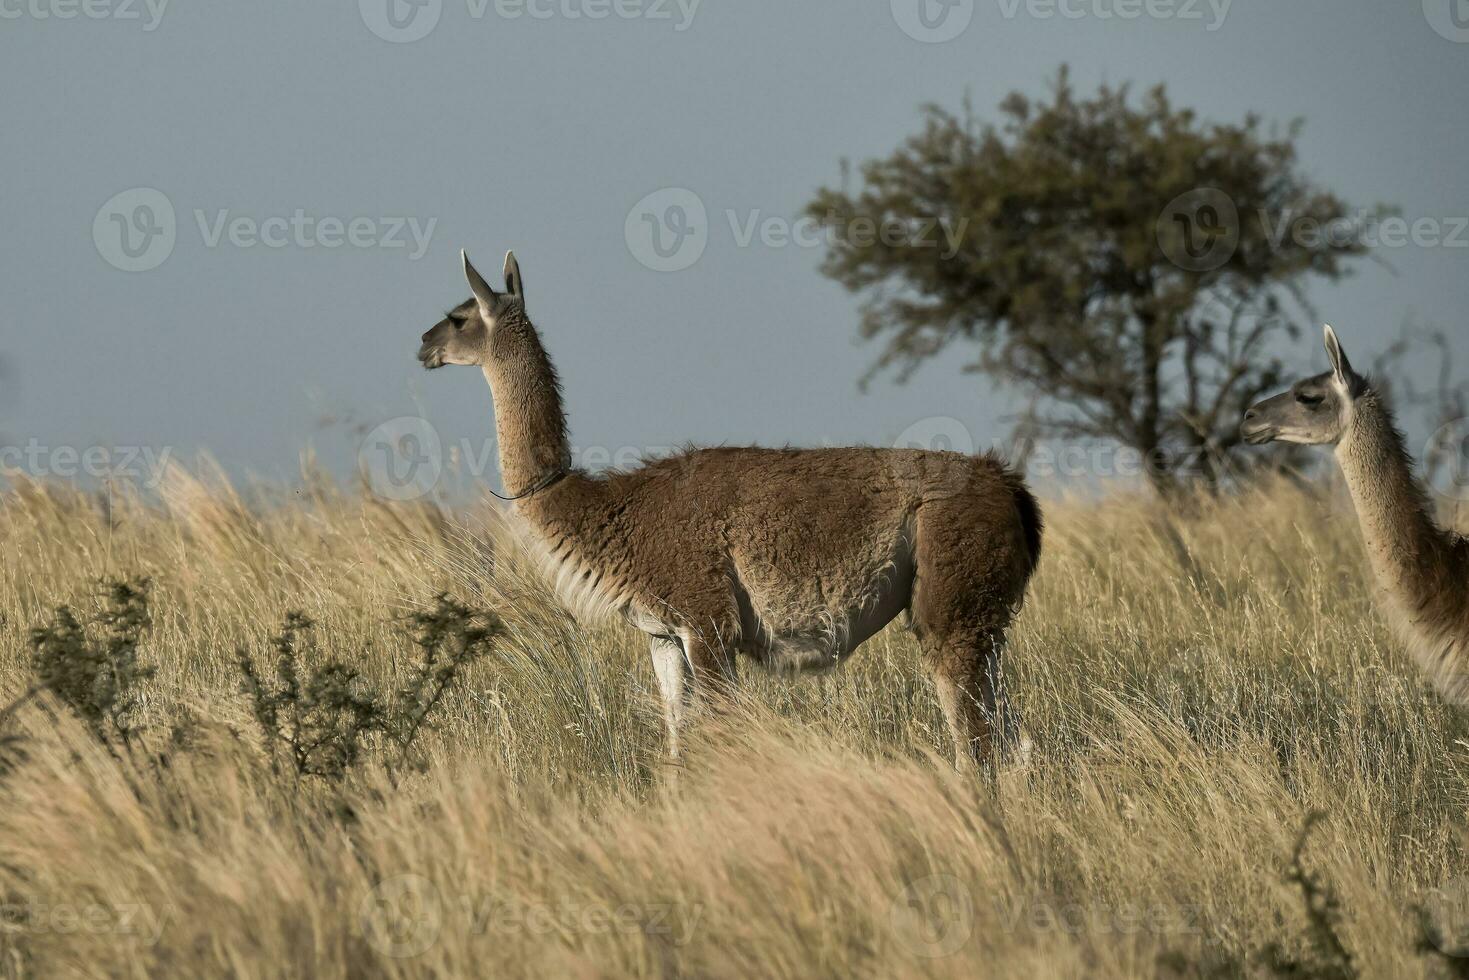 Guanacos in grassland environment, Parque Luro Nature reserve, La Pampa province, Argentina. photo